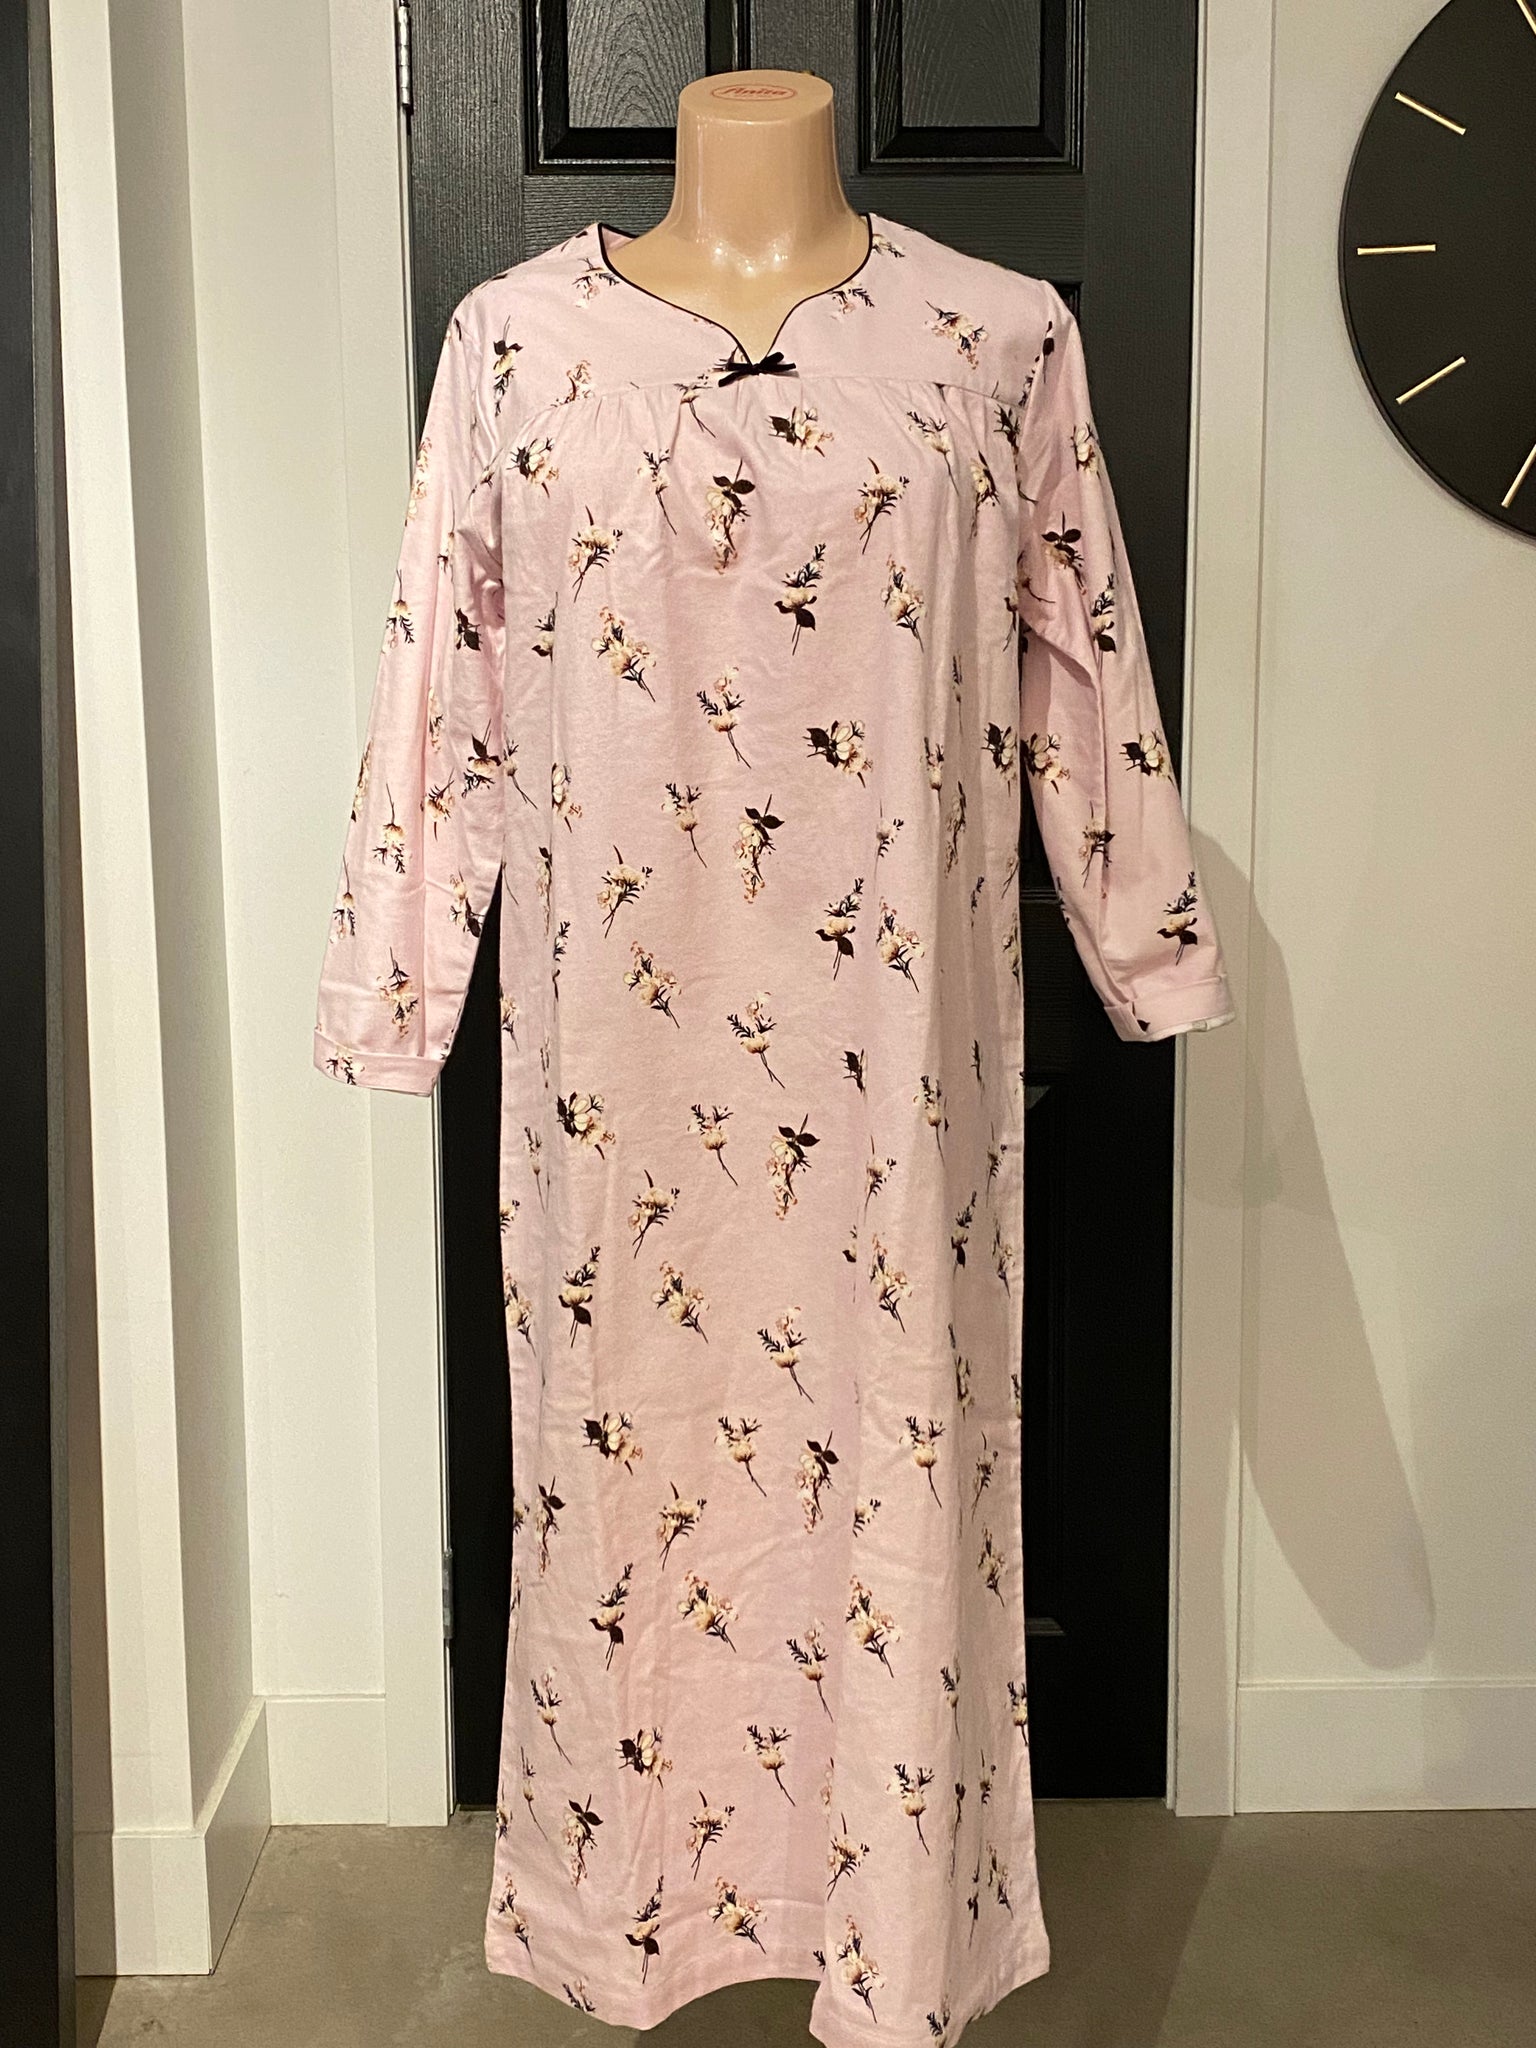 KayAnna Flannel Night Gown- F11435- 100%cotton